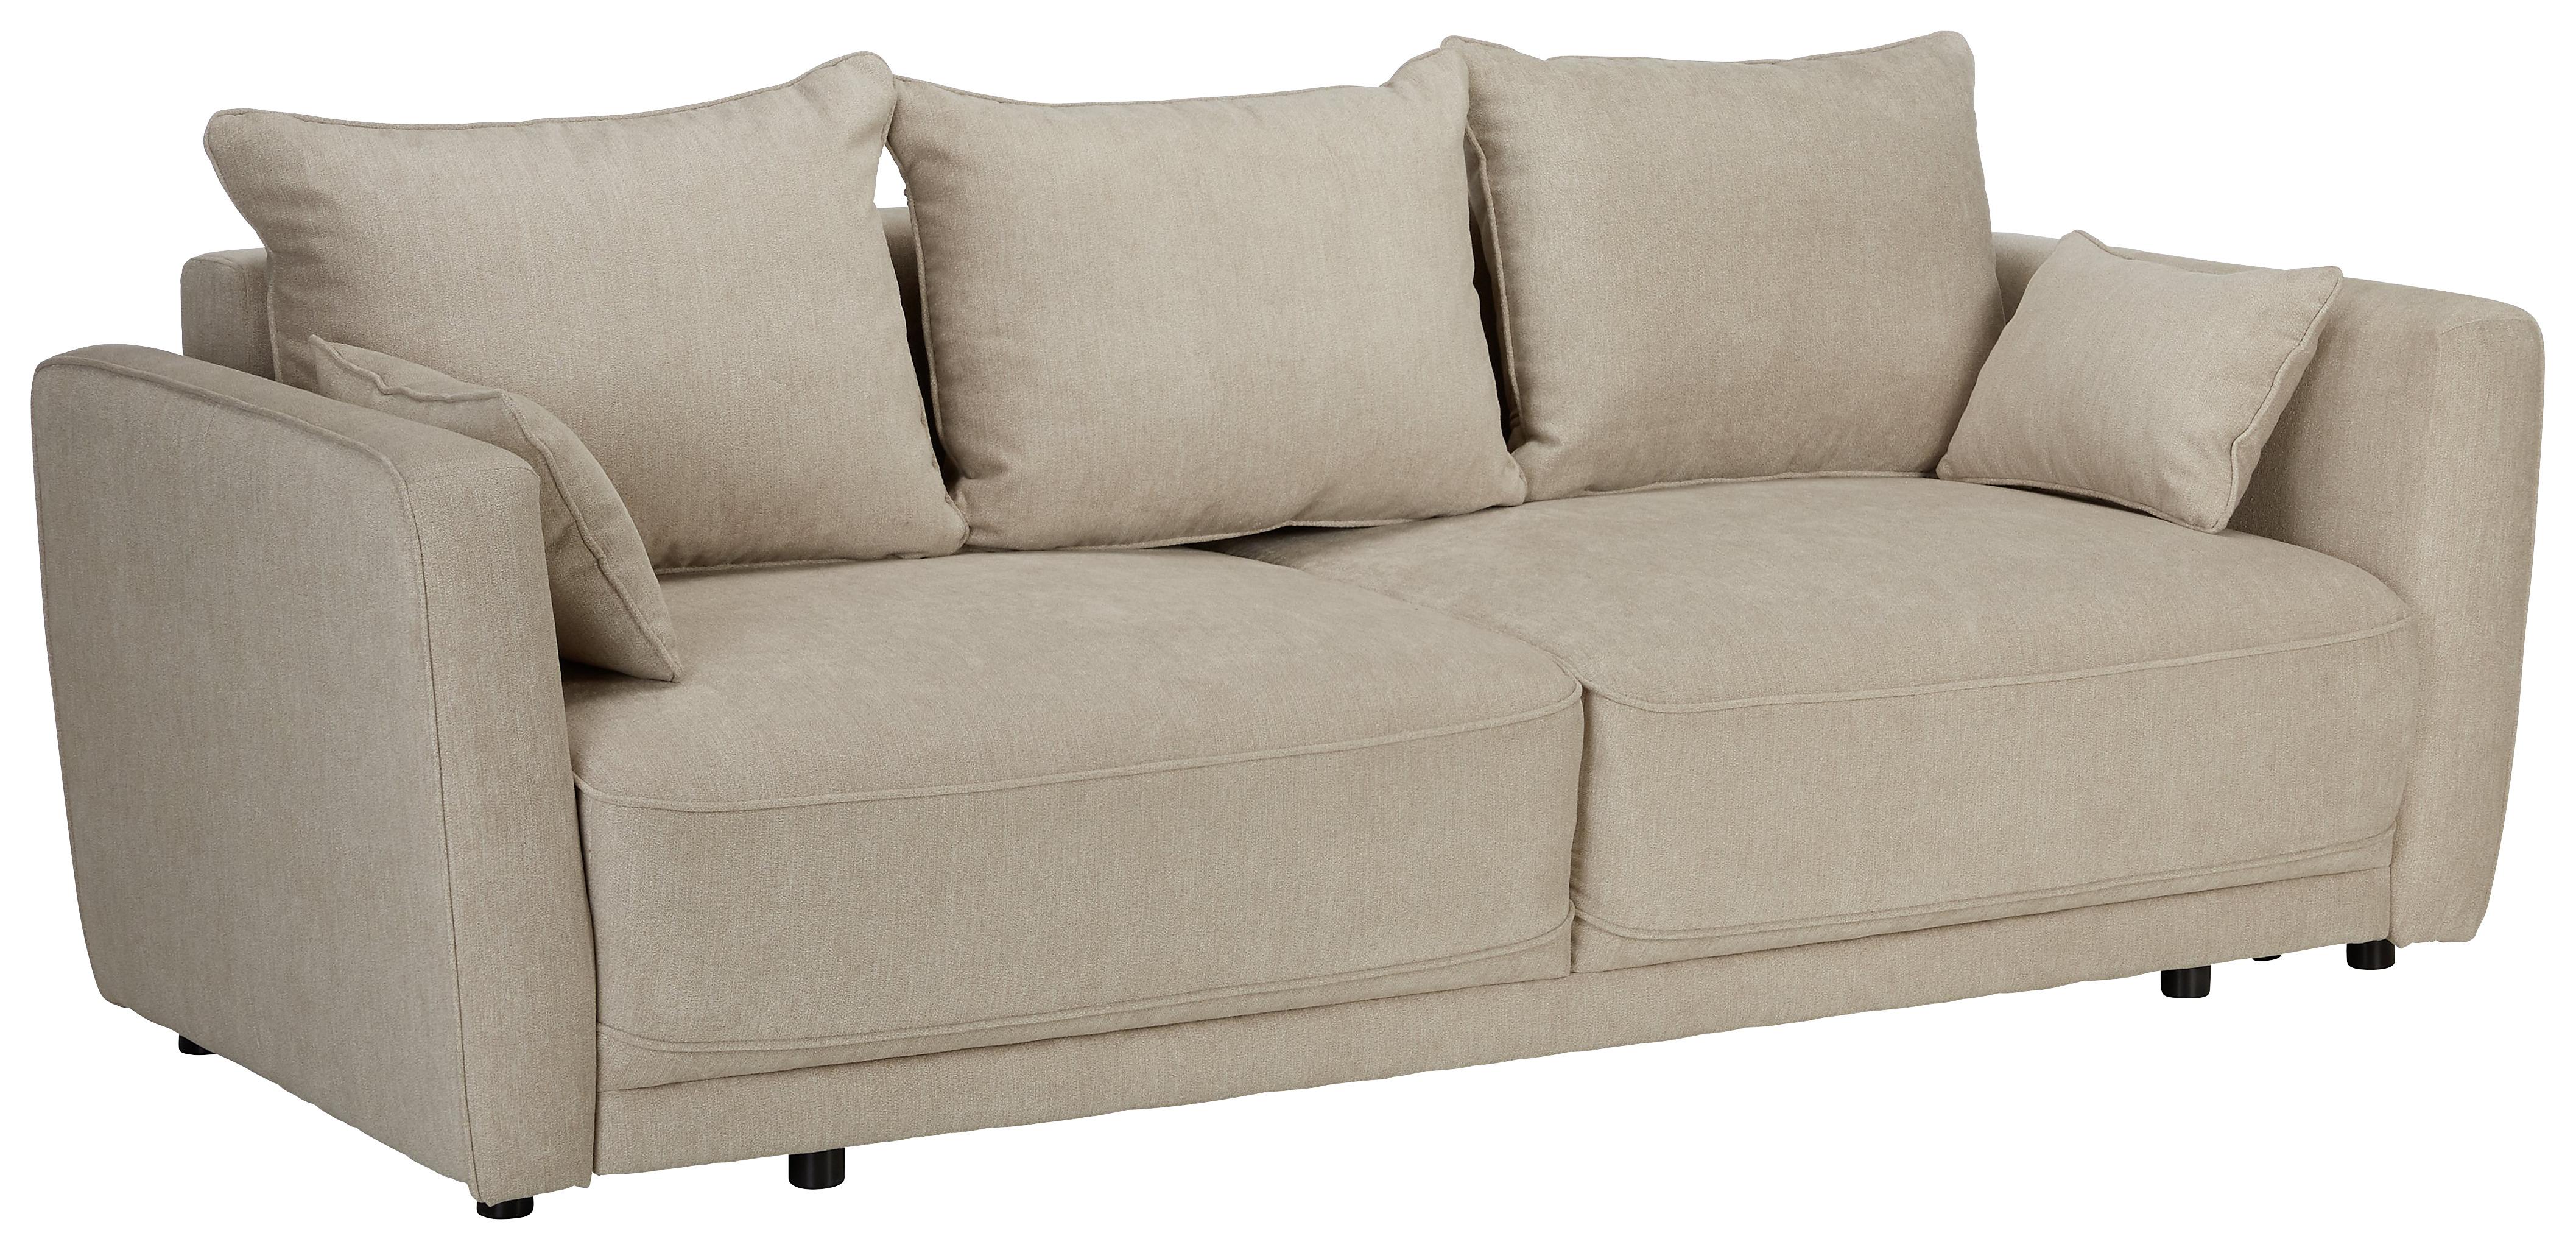 Canapea extensibilă Andora - bej, Modern, textil (238/90/104cm) - Modern Living